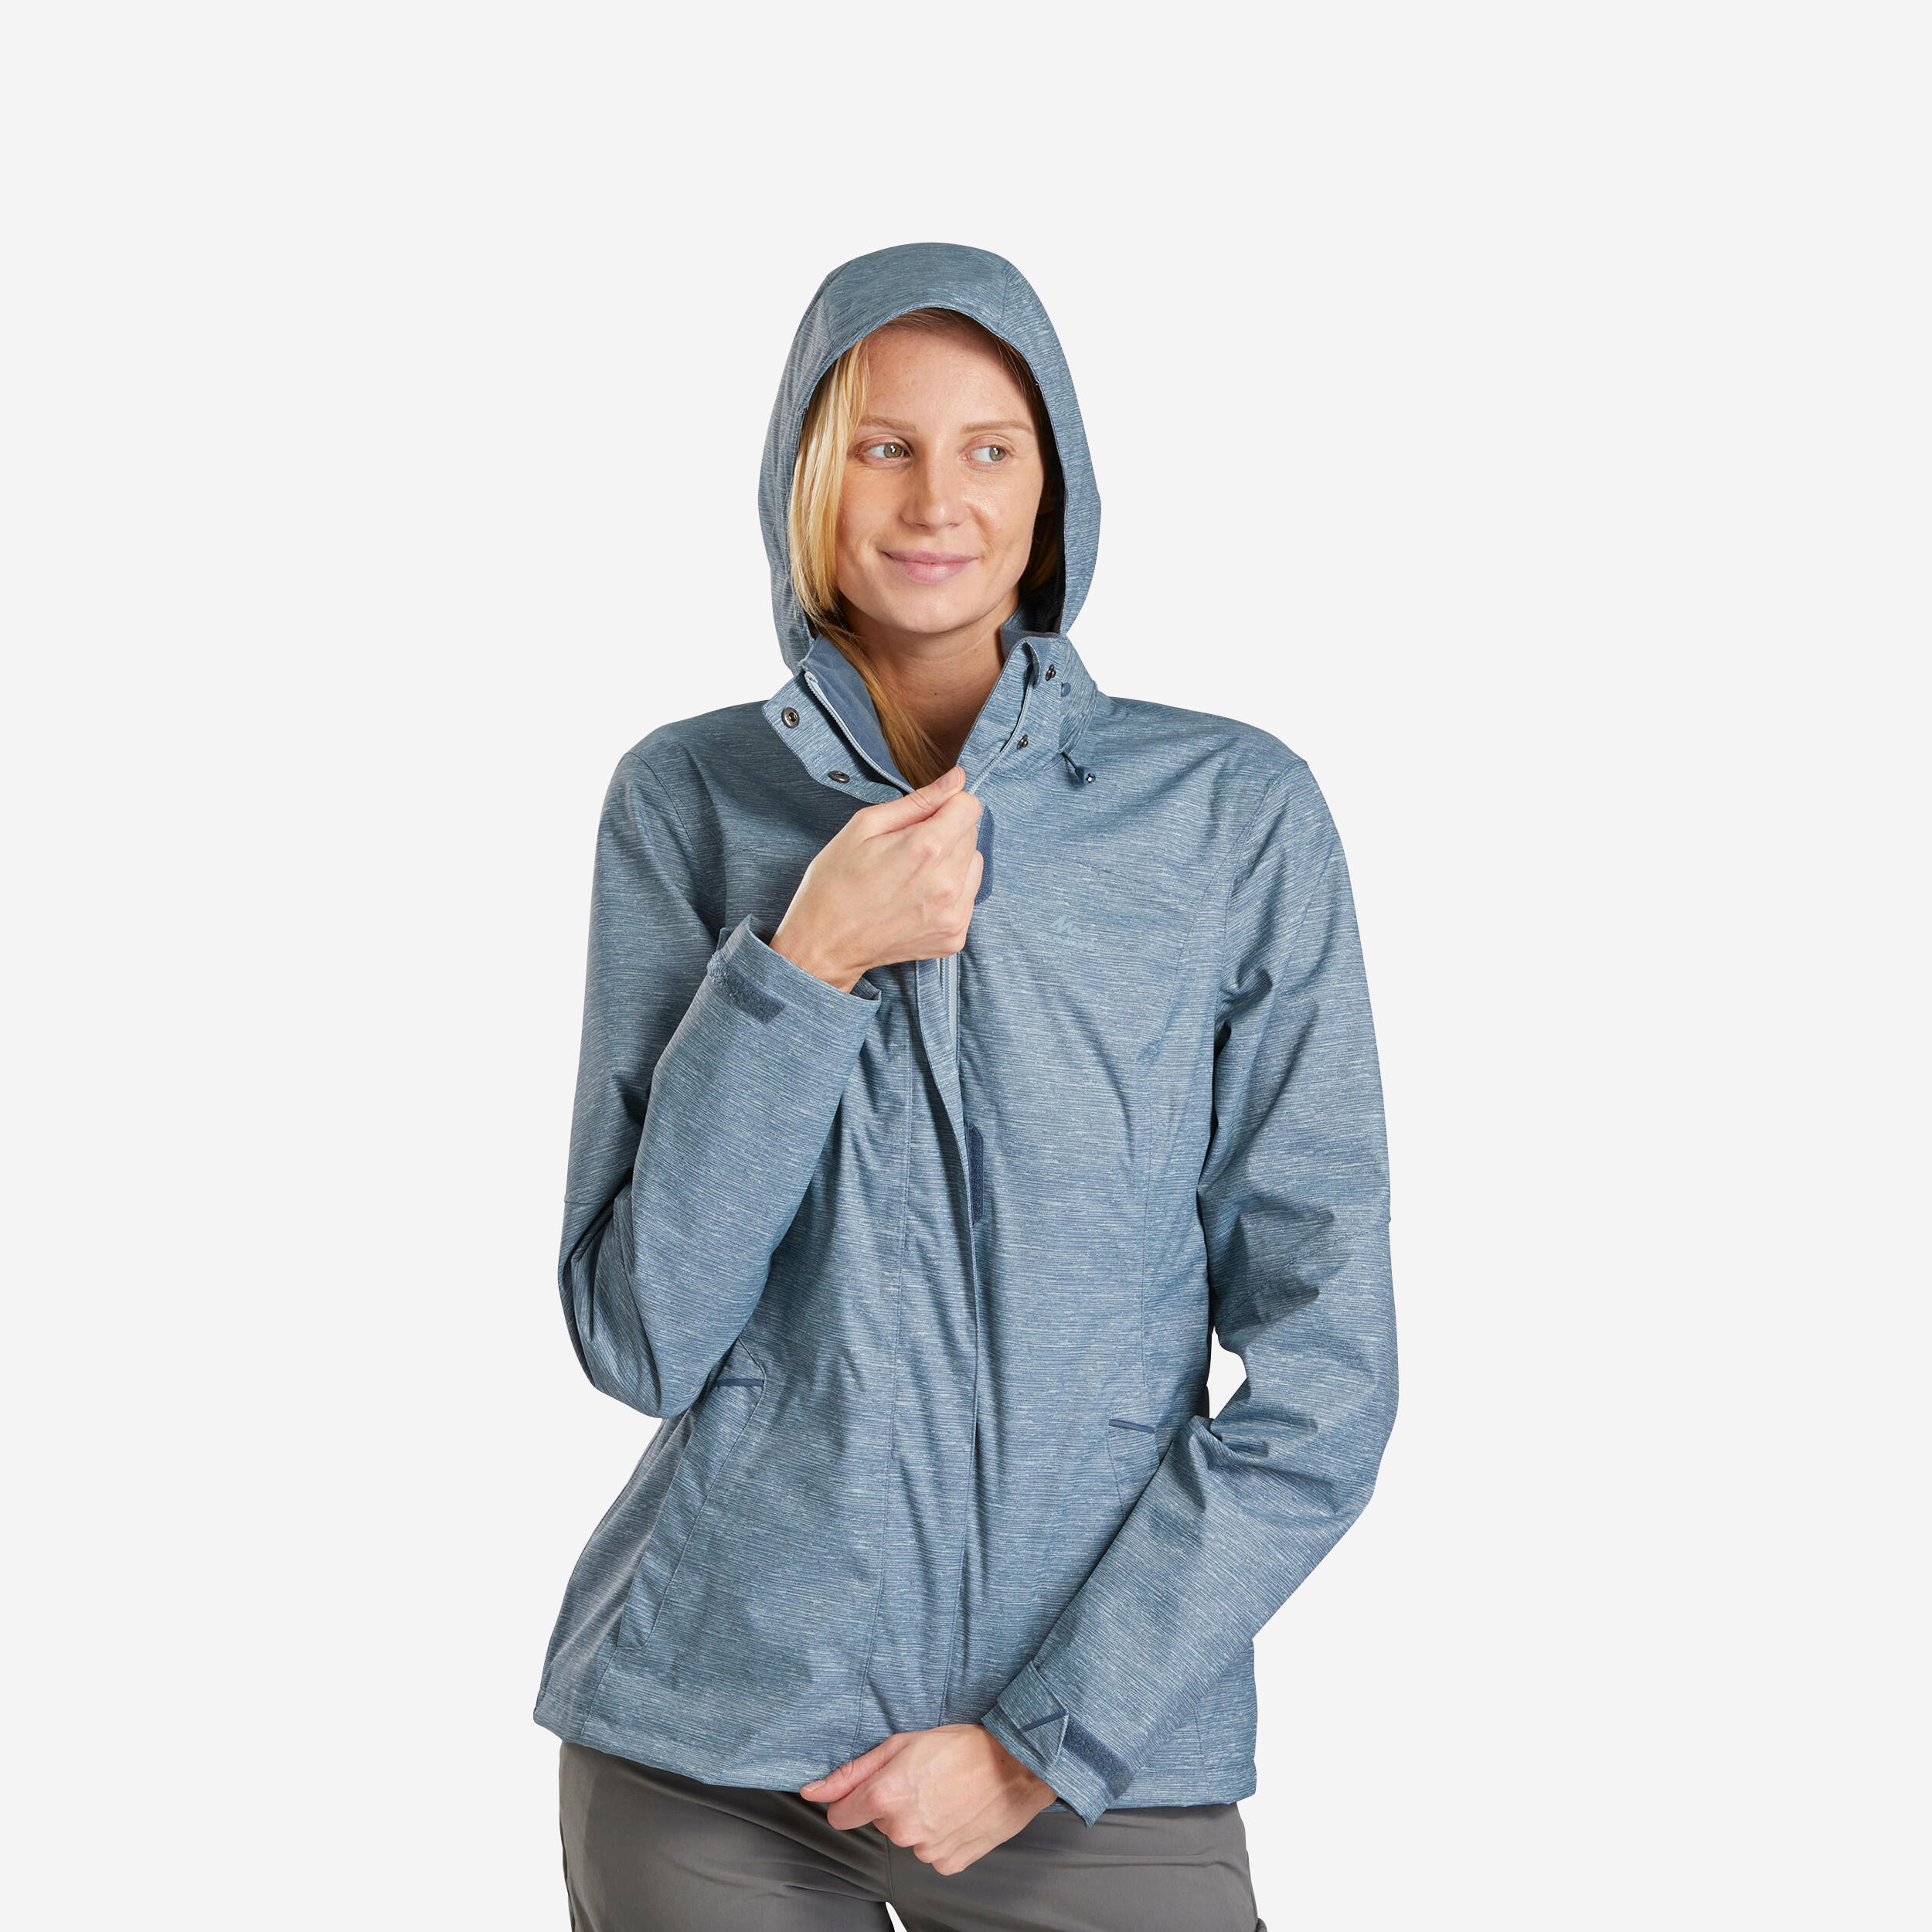 MH 100 Hiking Fleece Jacket - Women - Mouse grey, Storm grey - Quechua -  Decathlon